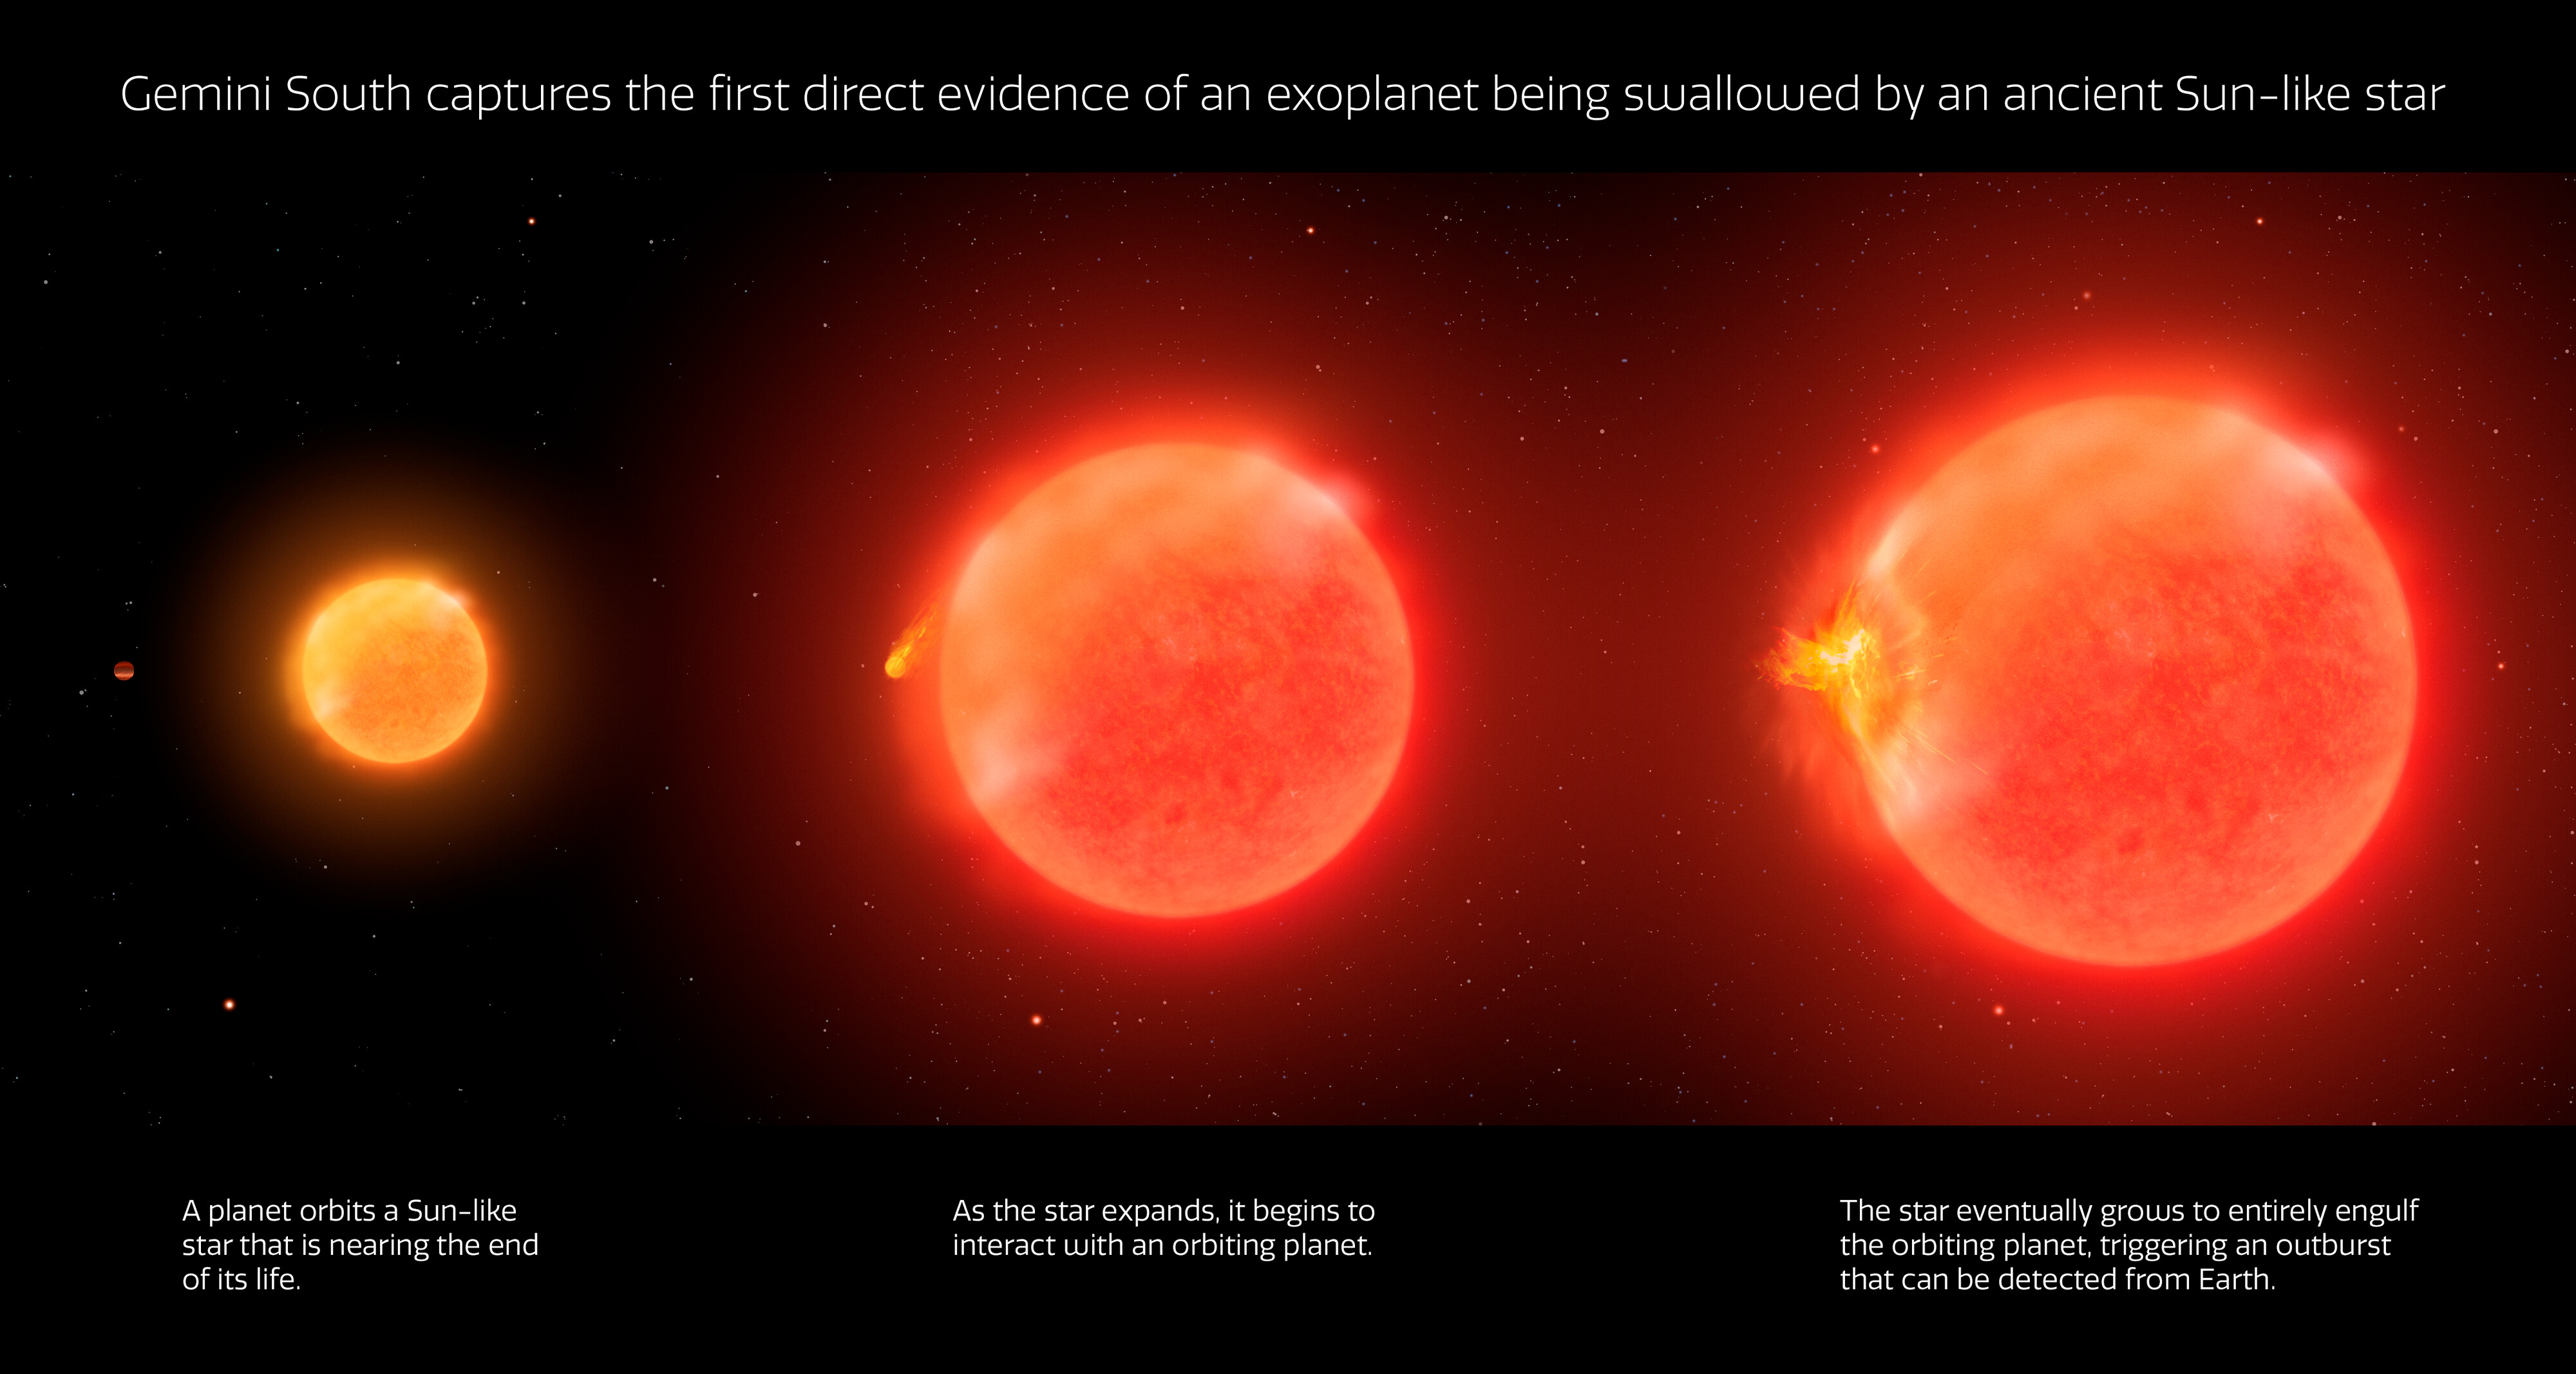 expanding evolving star with hot Jupiter planet